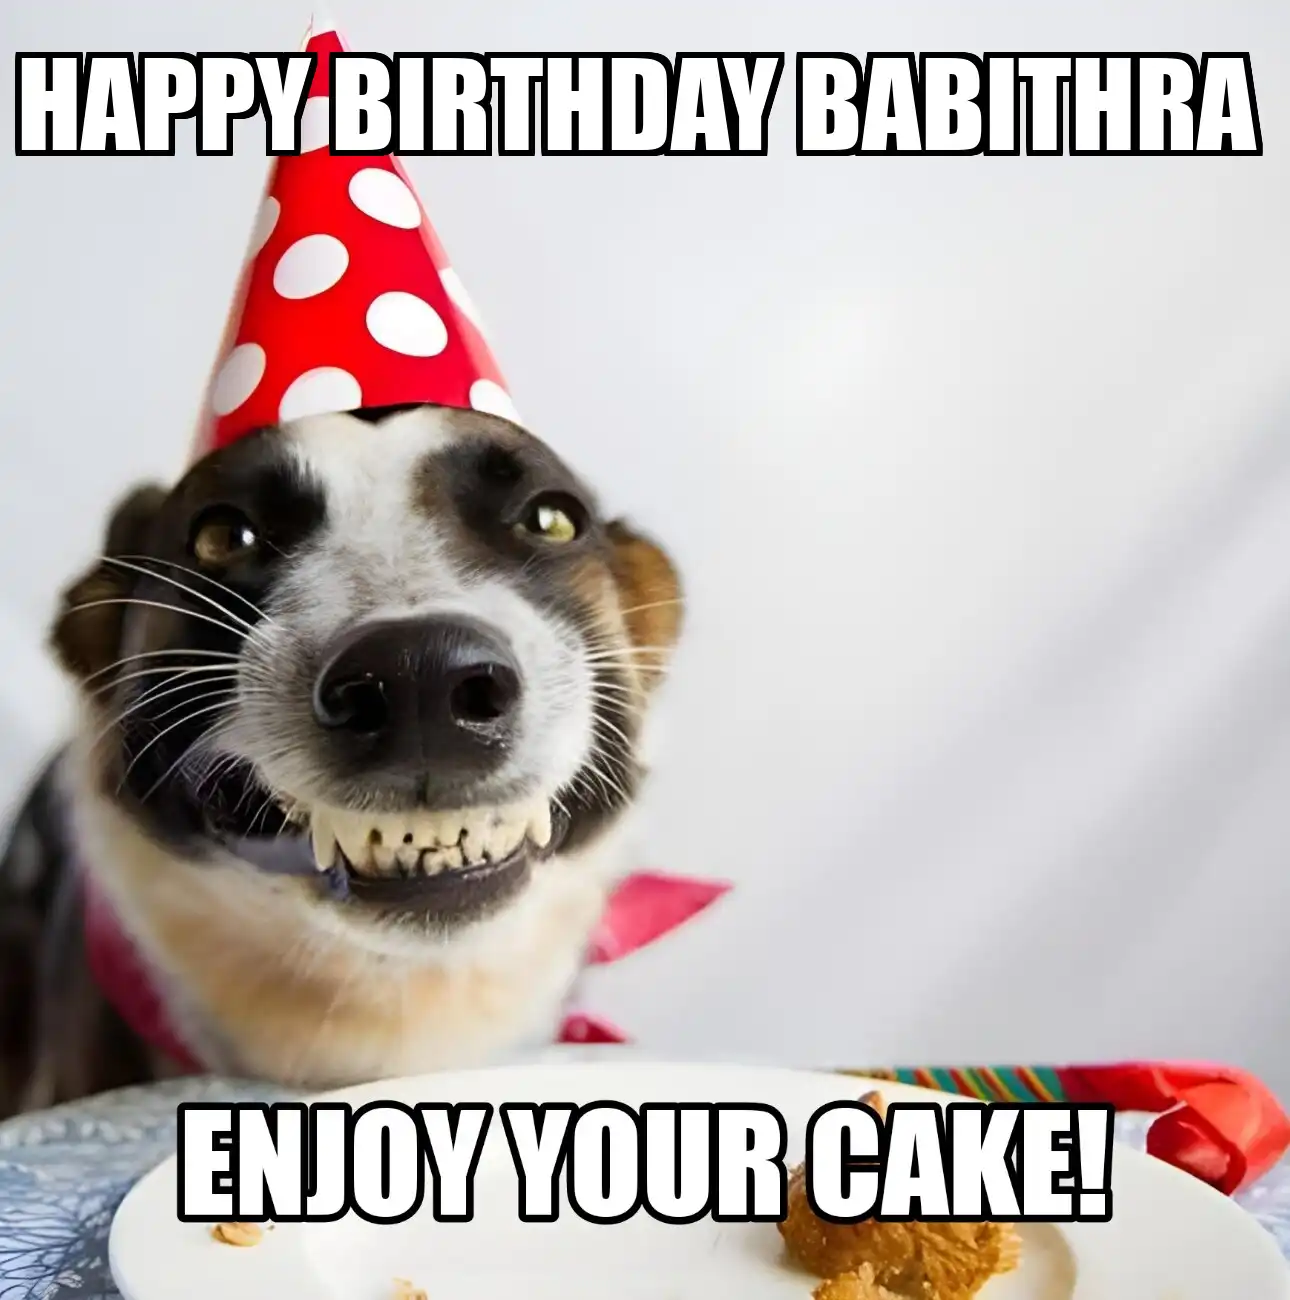 Happy Birthday Babithra Enjoy Your Cake Dog Meme